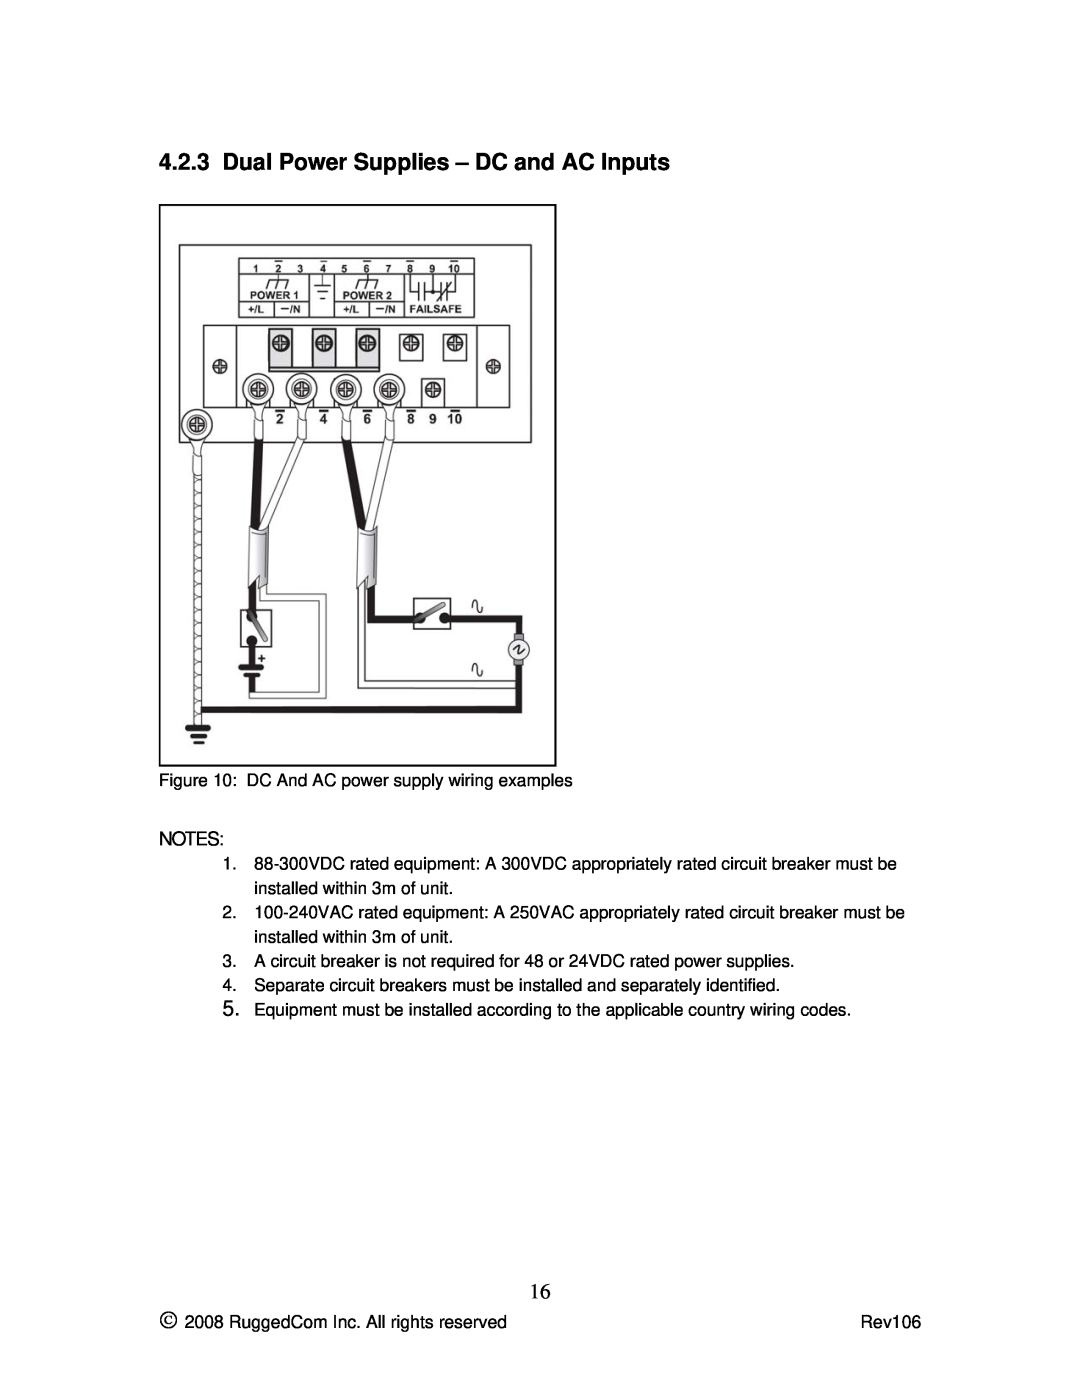 RuggedCom M2100 manual Dual Power Supplies - DC and AC Inputs 